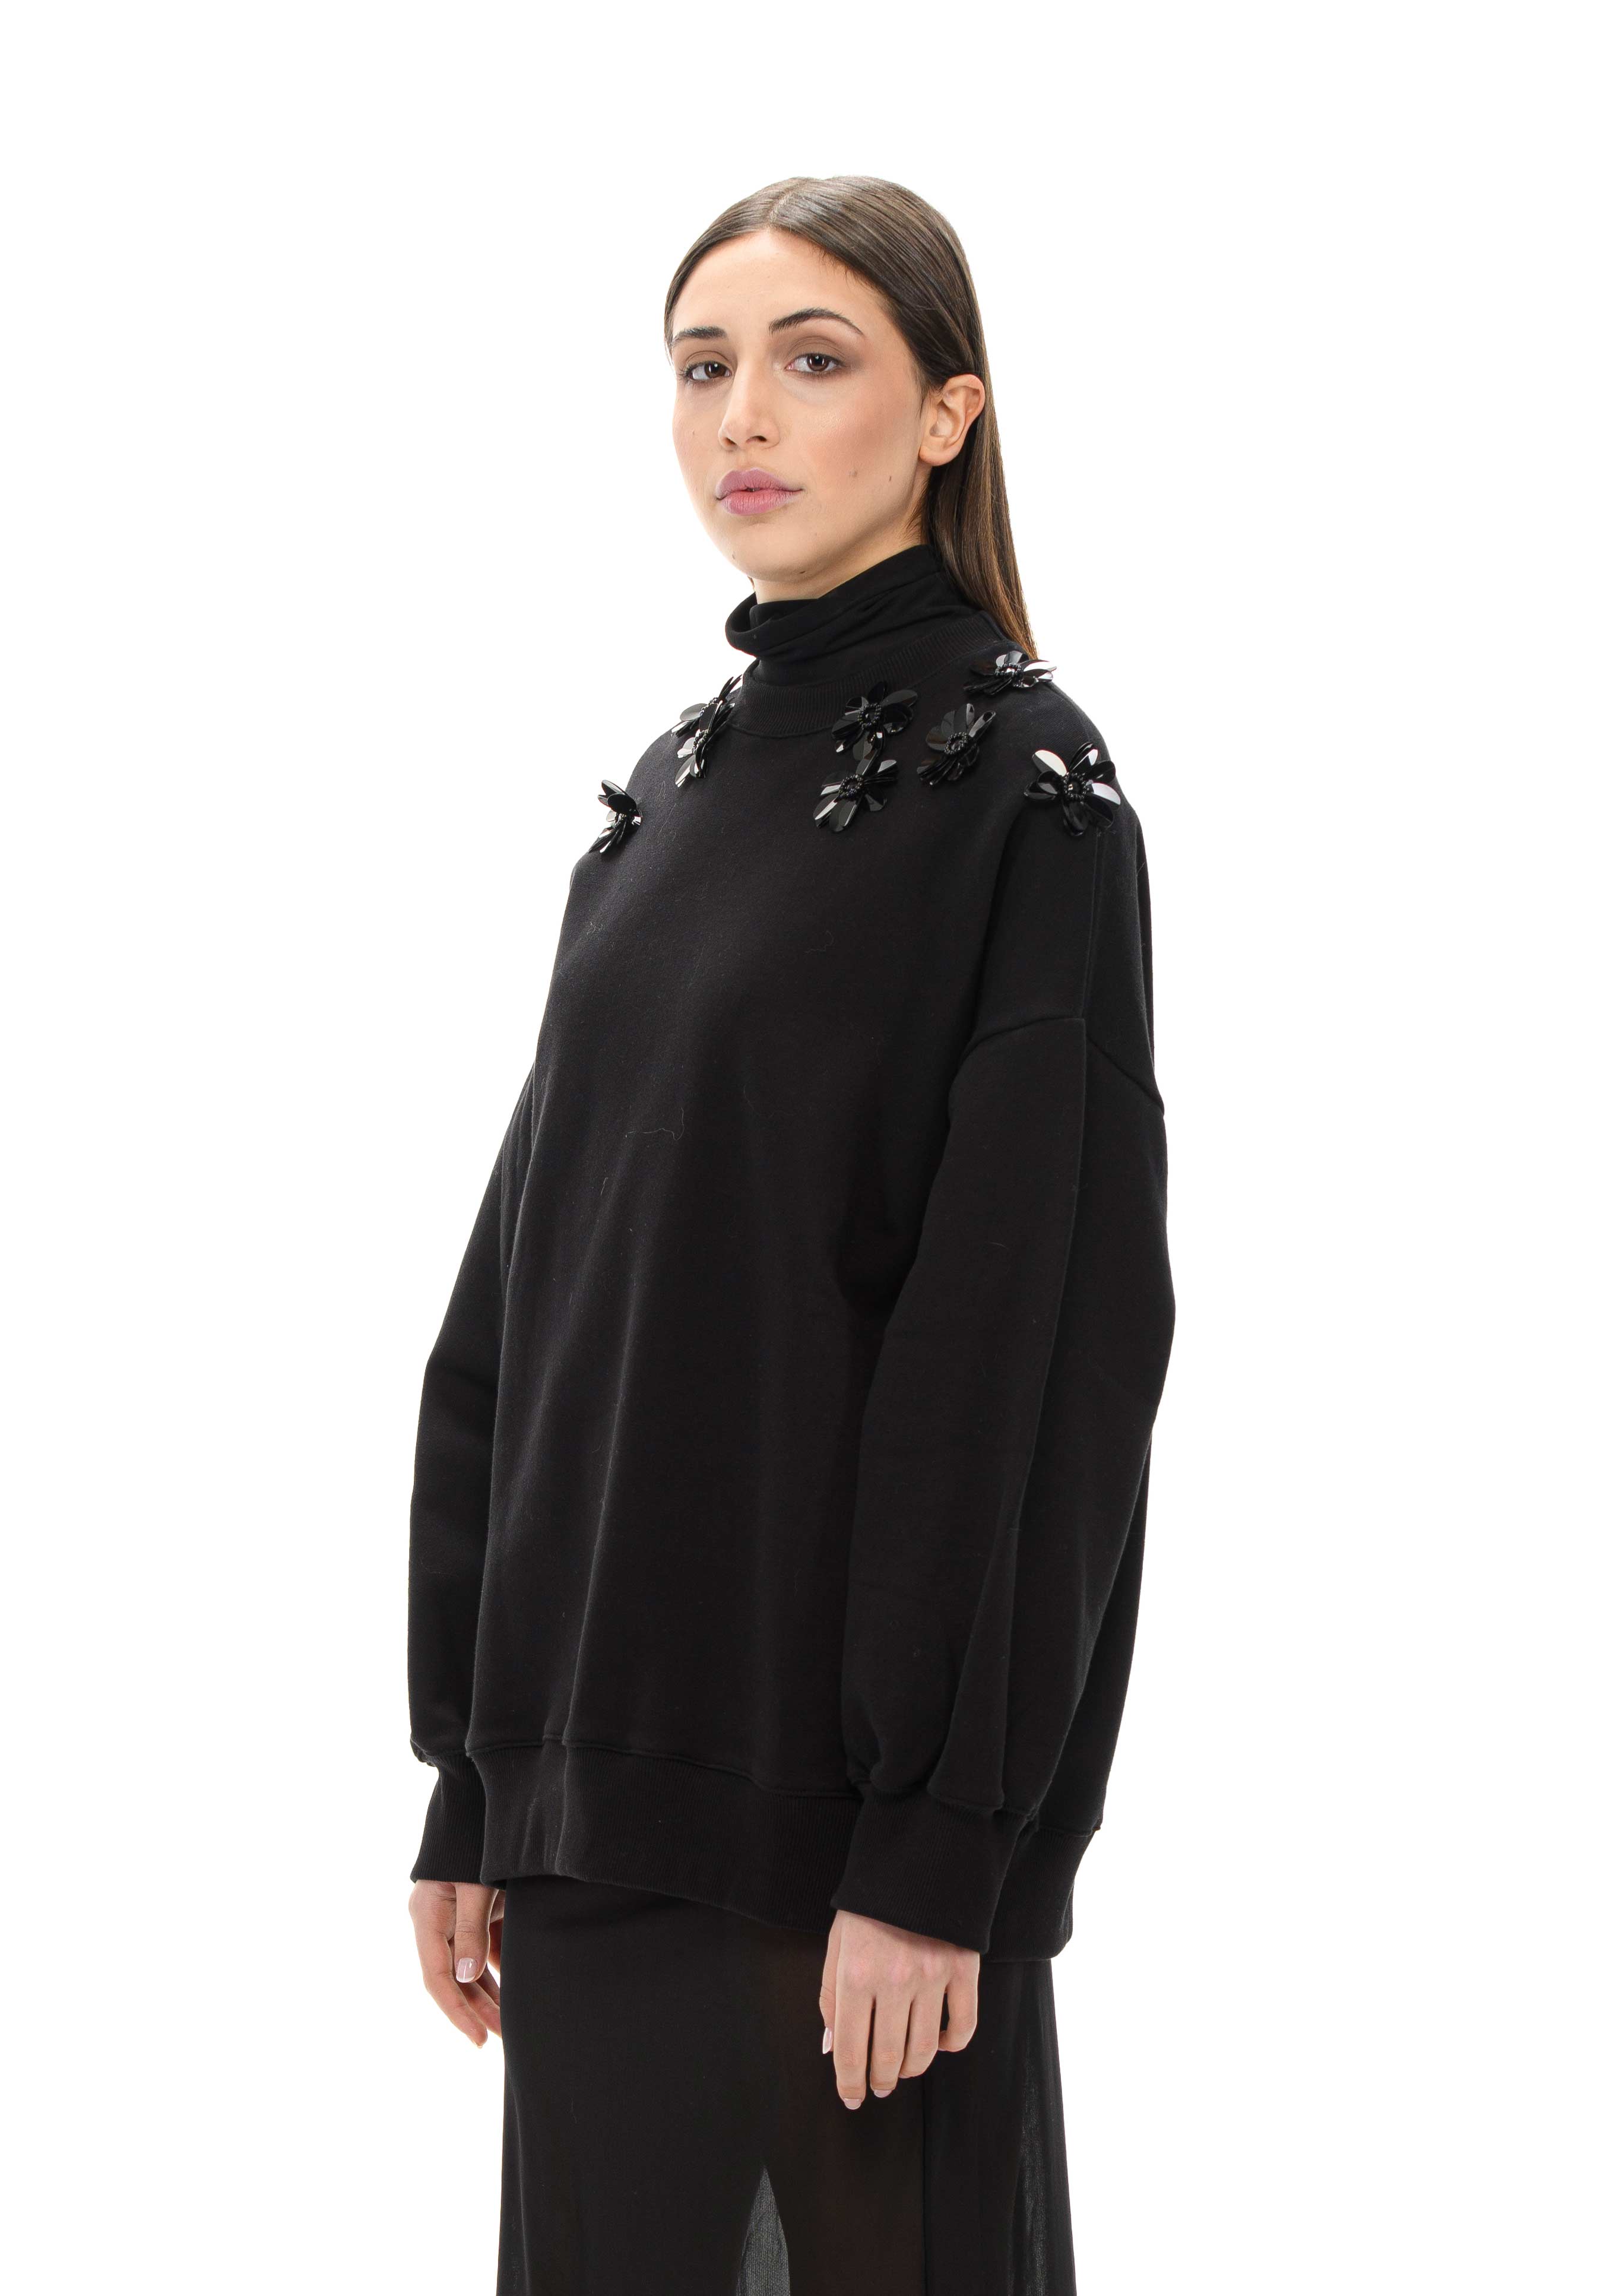 BELLATRIX Black sweatshirt with applications